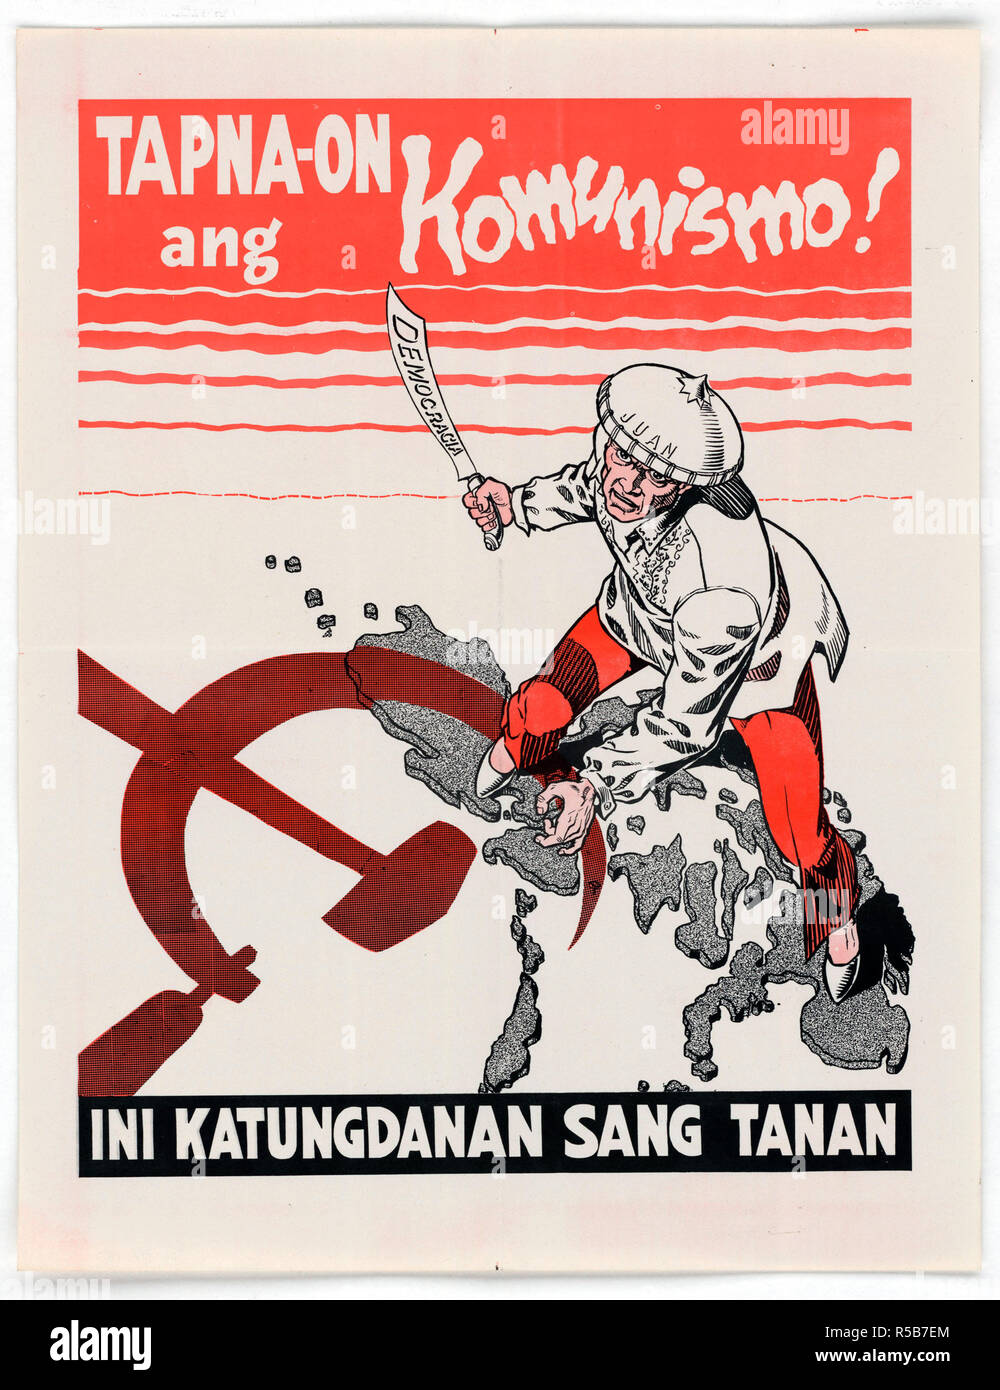 8/13/1951 - U.S. Propaganda Posters in 1950s Asia - 8/13/1951 - U.S. Propaganda Posters in 1950s Asia - Stop Communism (written in Hiligaynon) Stock Photo